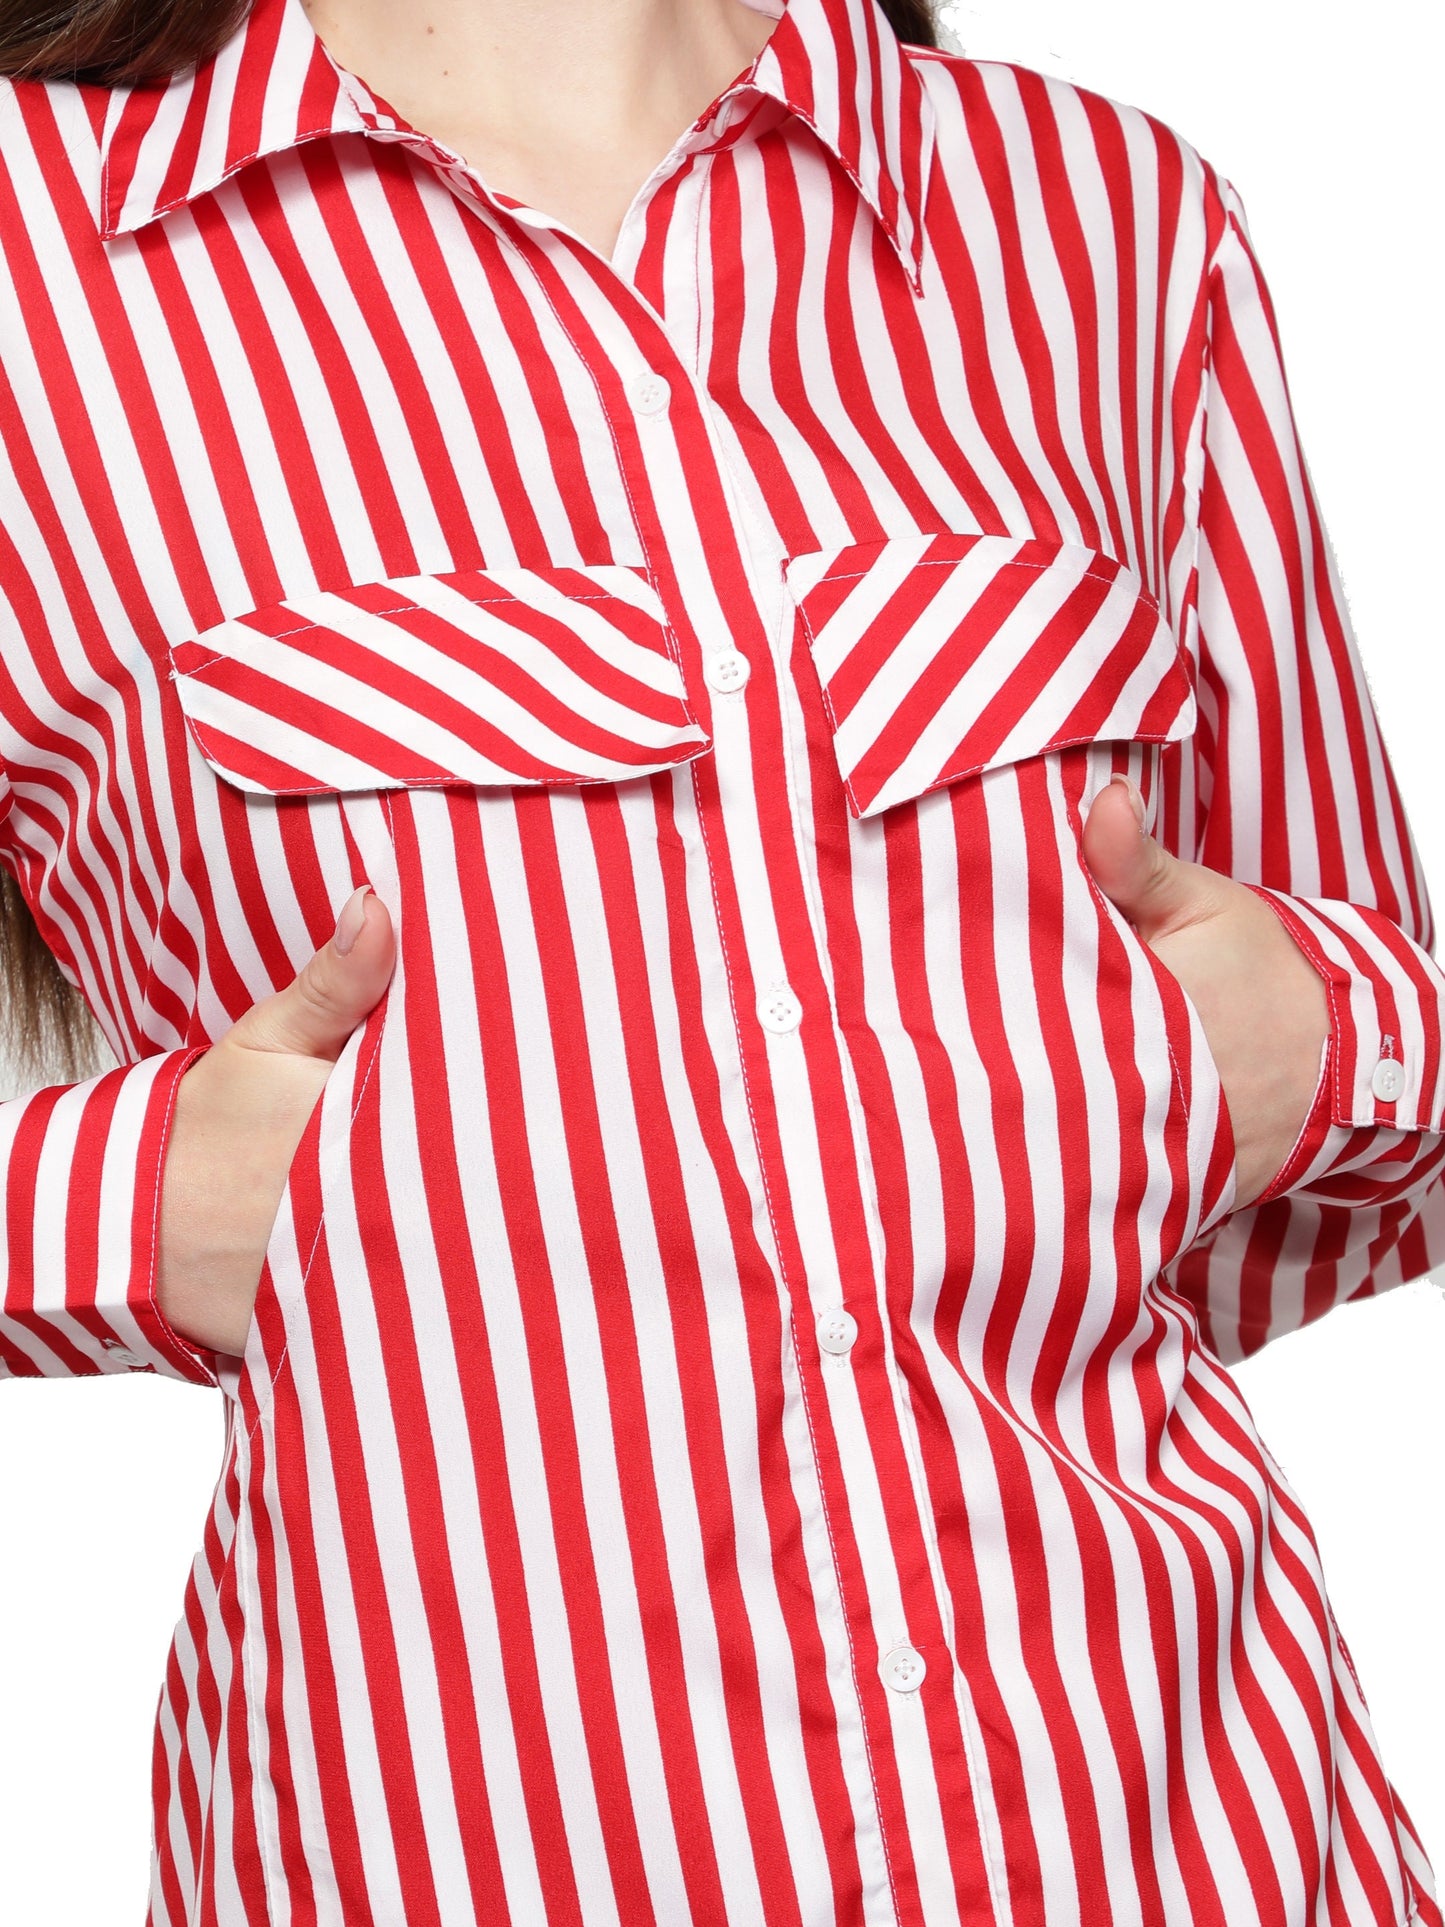 Cora Dress Red White Stripe